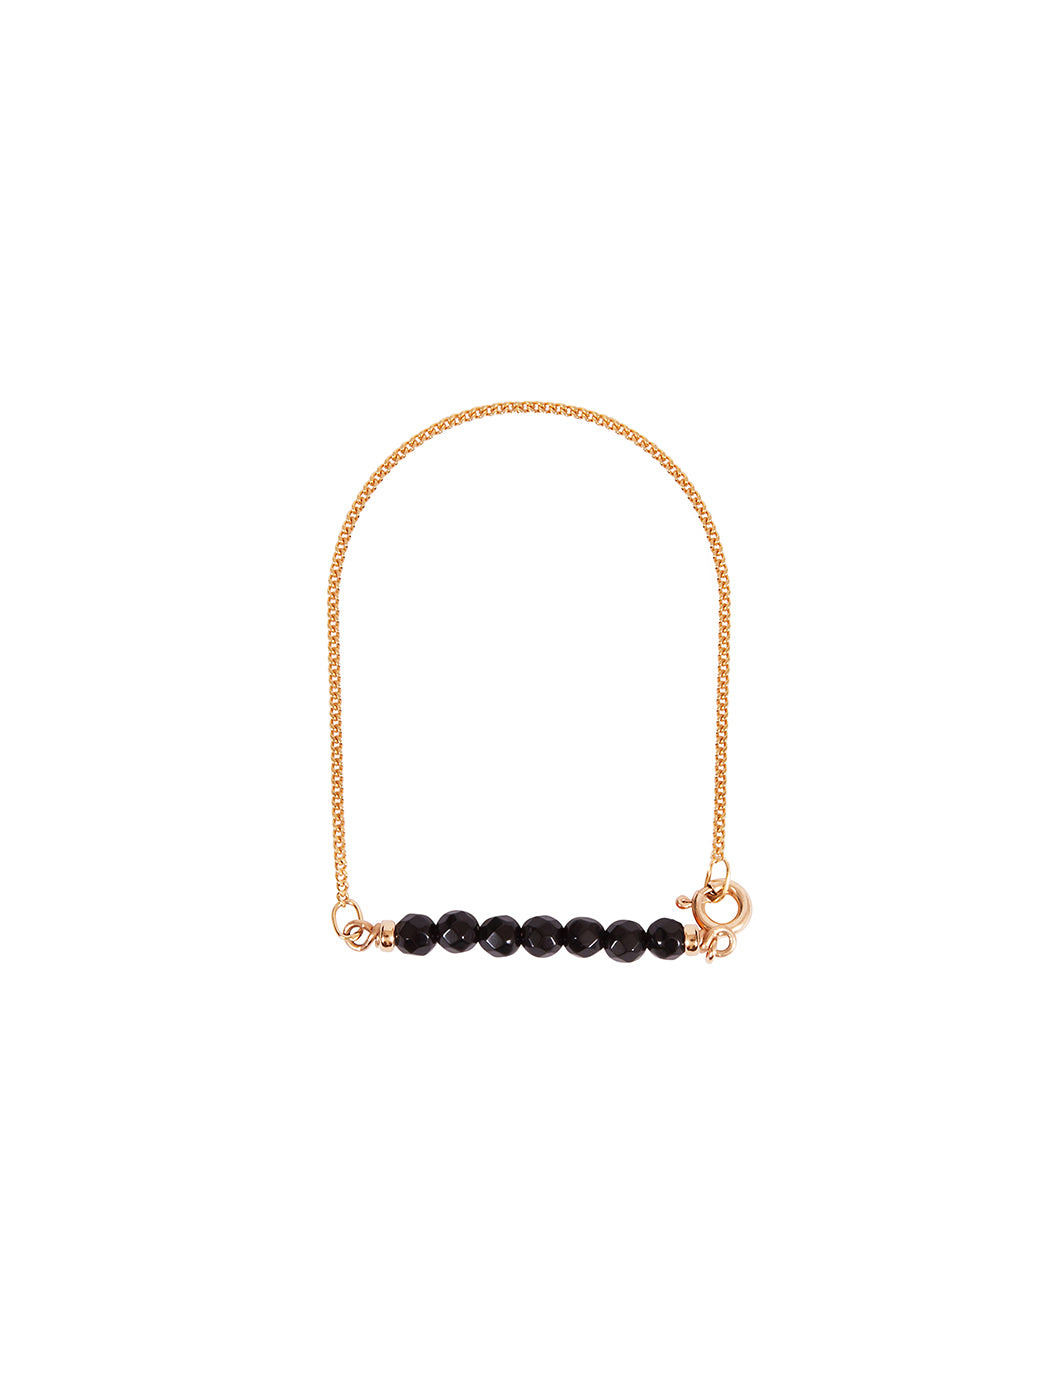 Fiorina Jewellery Gold Friendship Bracelet Black Onyx